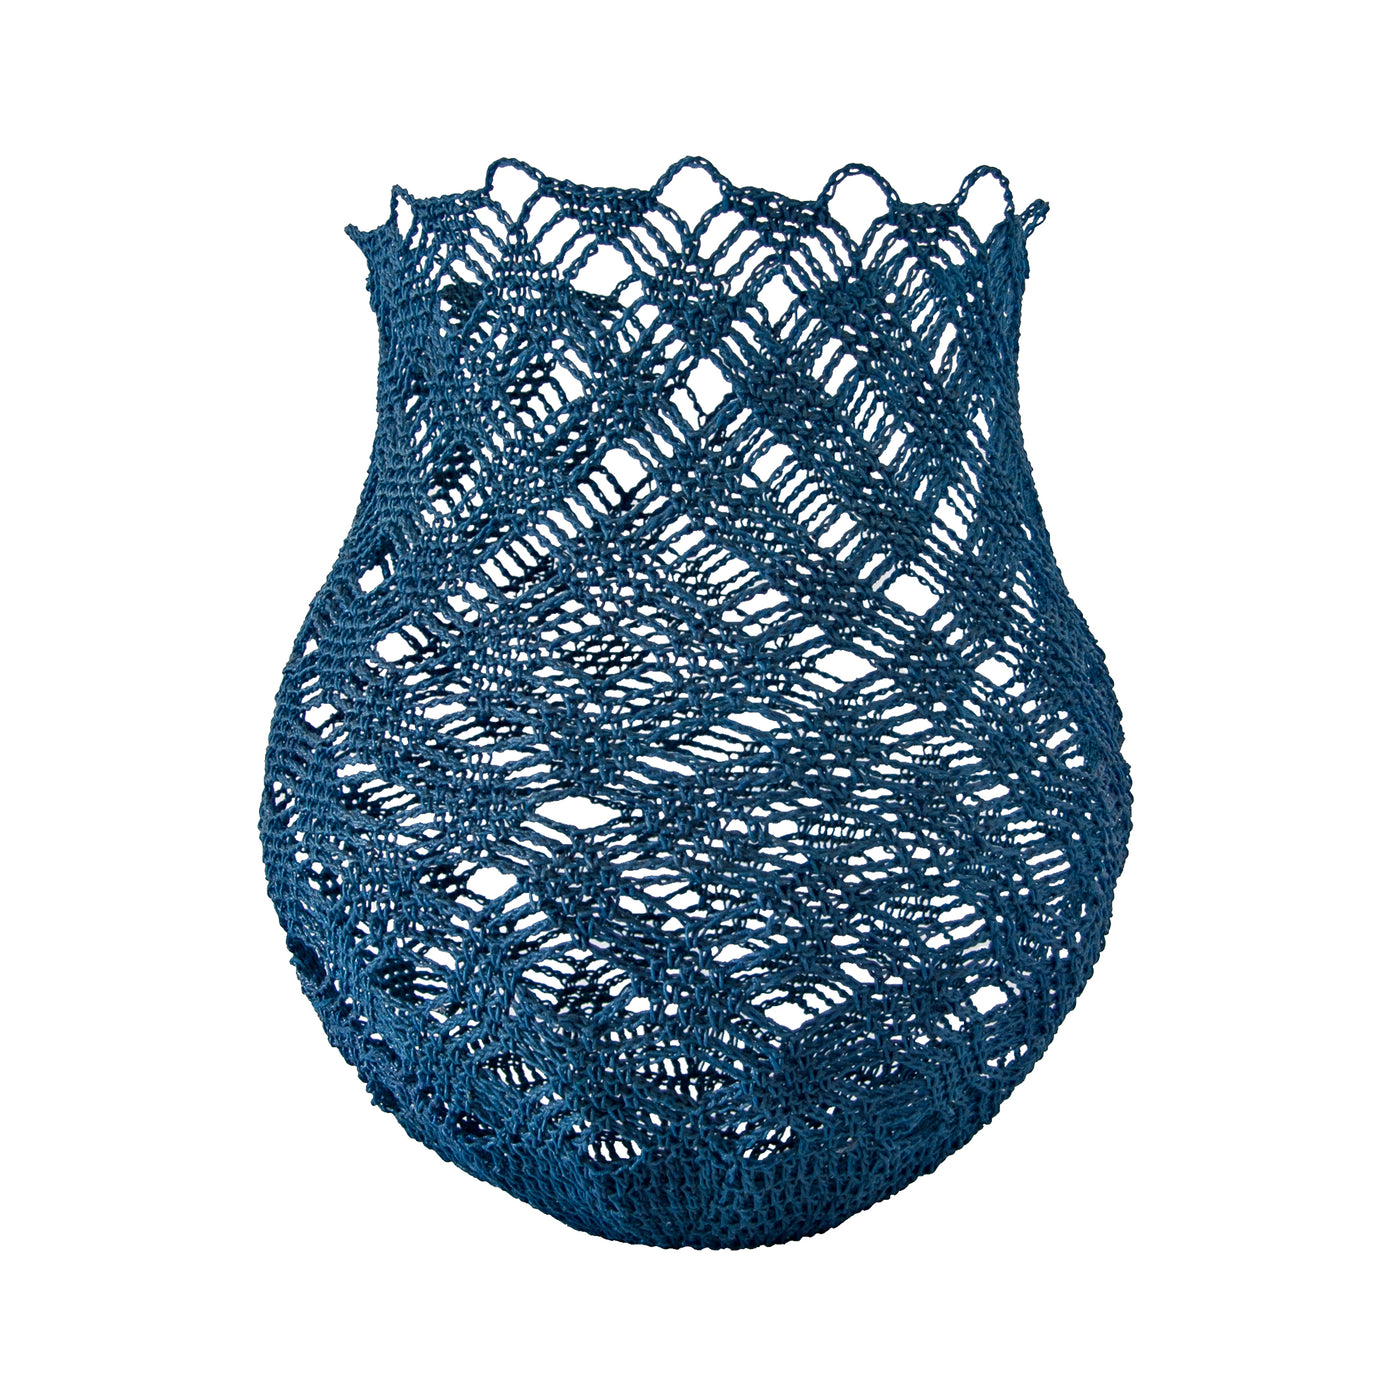 Crochet Basket (large | indigo blue) by Safari Fusion www.safarifusion.com.au